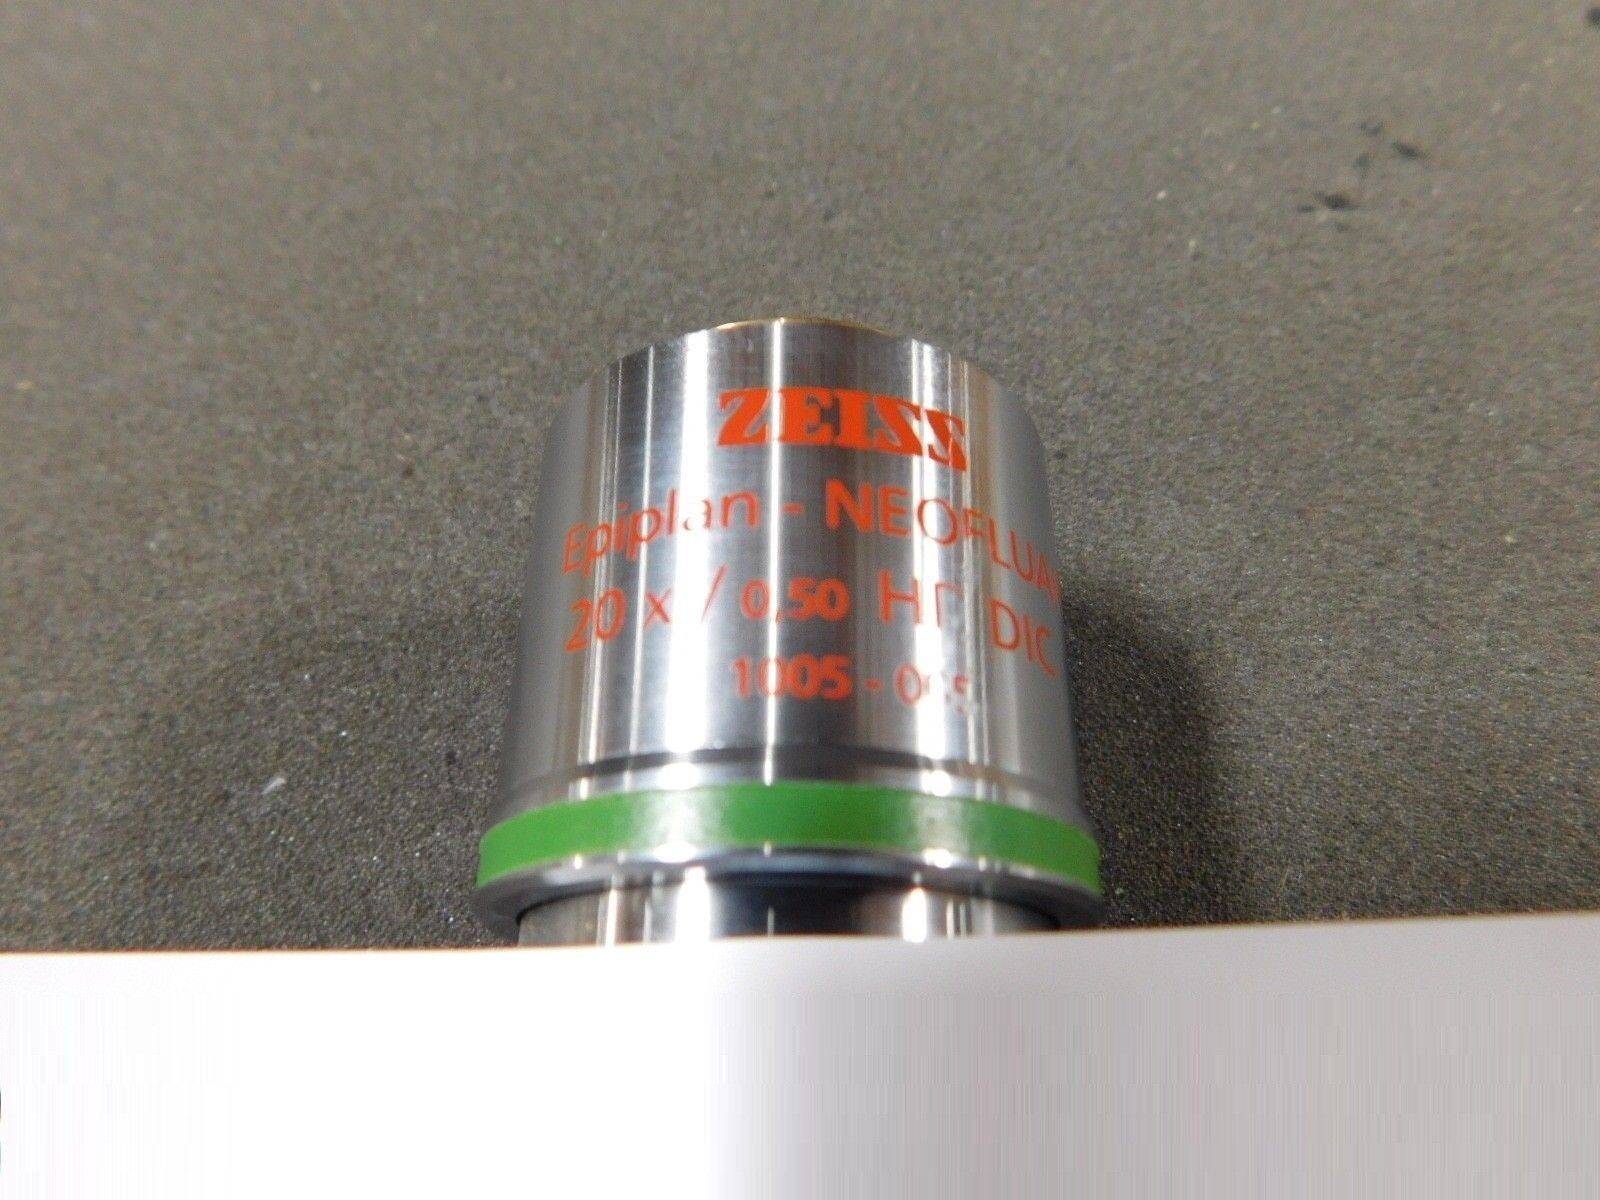 Carl Zeiss 1005-005 Epiplan-Neofluar Microscope Objective 20x/0.50 HD DIC 8/0